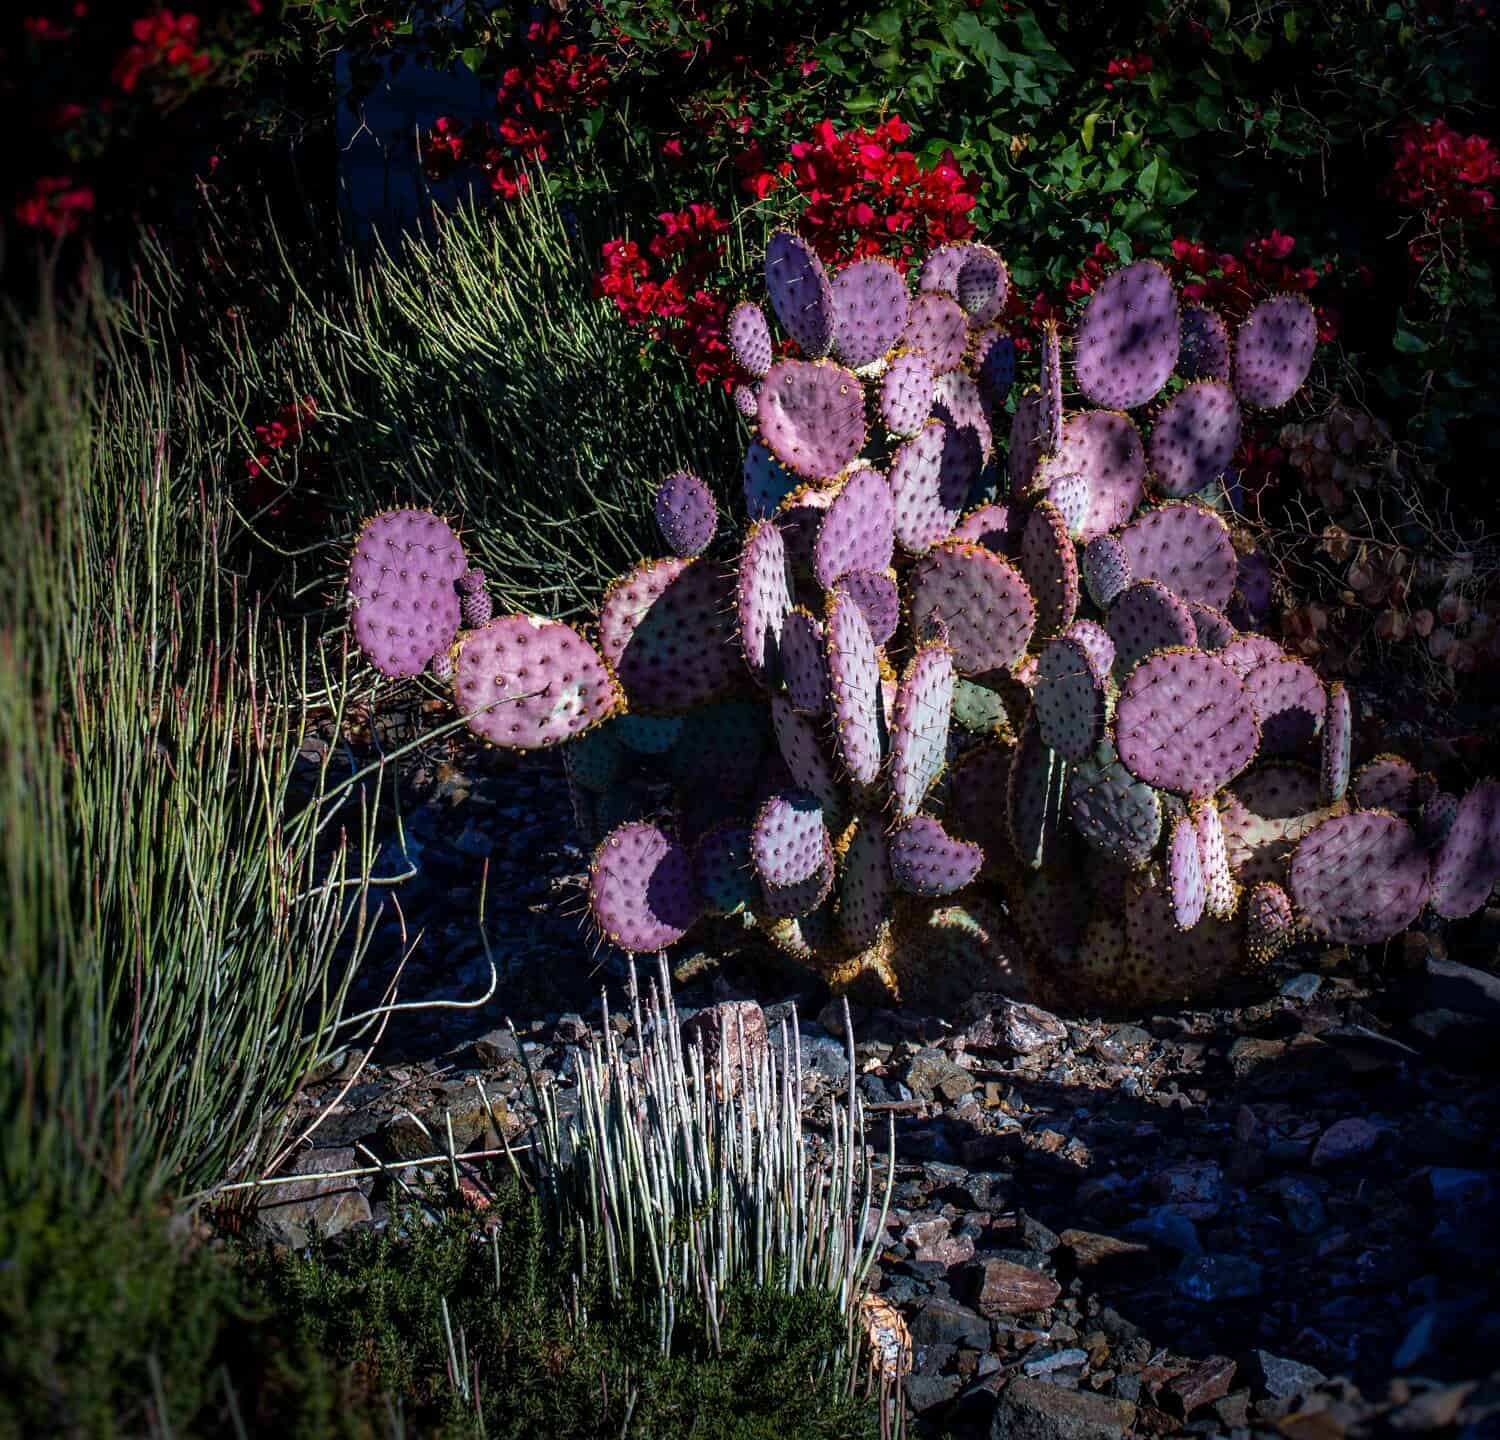 Purple prickly pear cactus grows in a rock garden in the Arizona desert